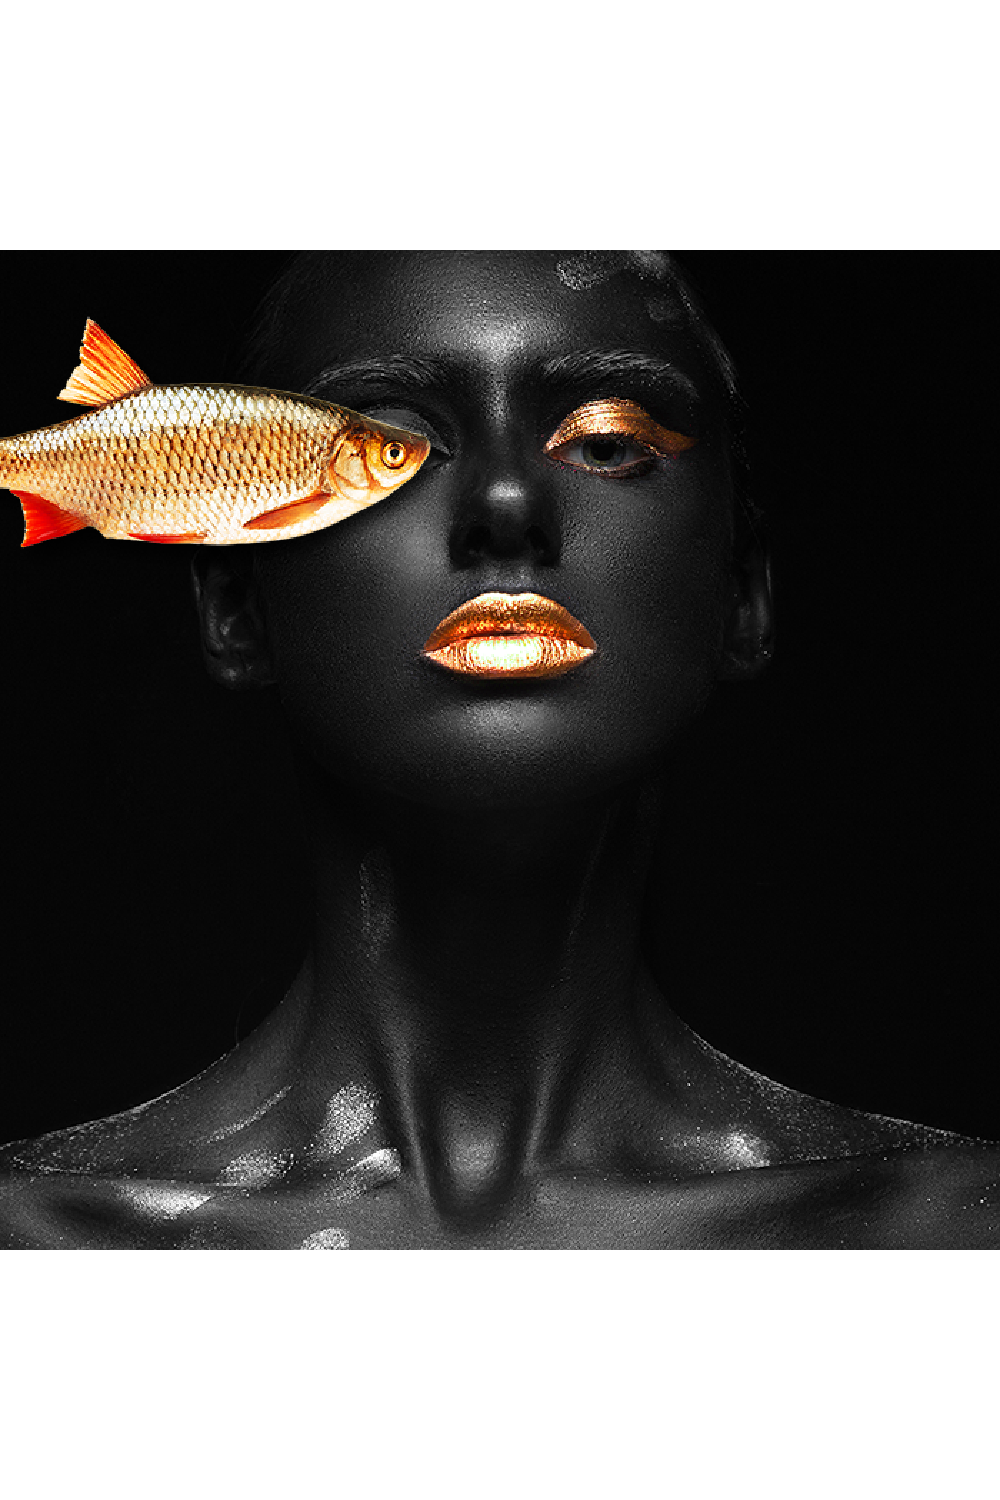 Woman and Gold Fish Artwork | Andrew Martin Golden Eye | OROA